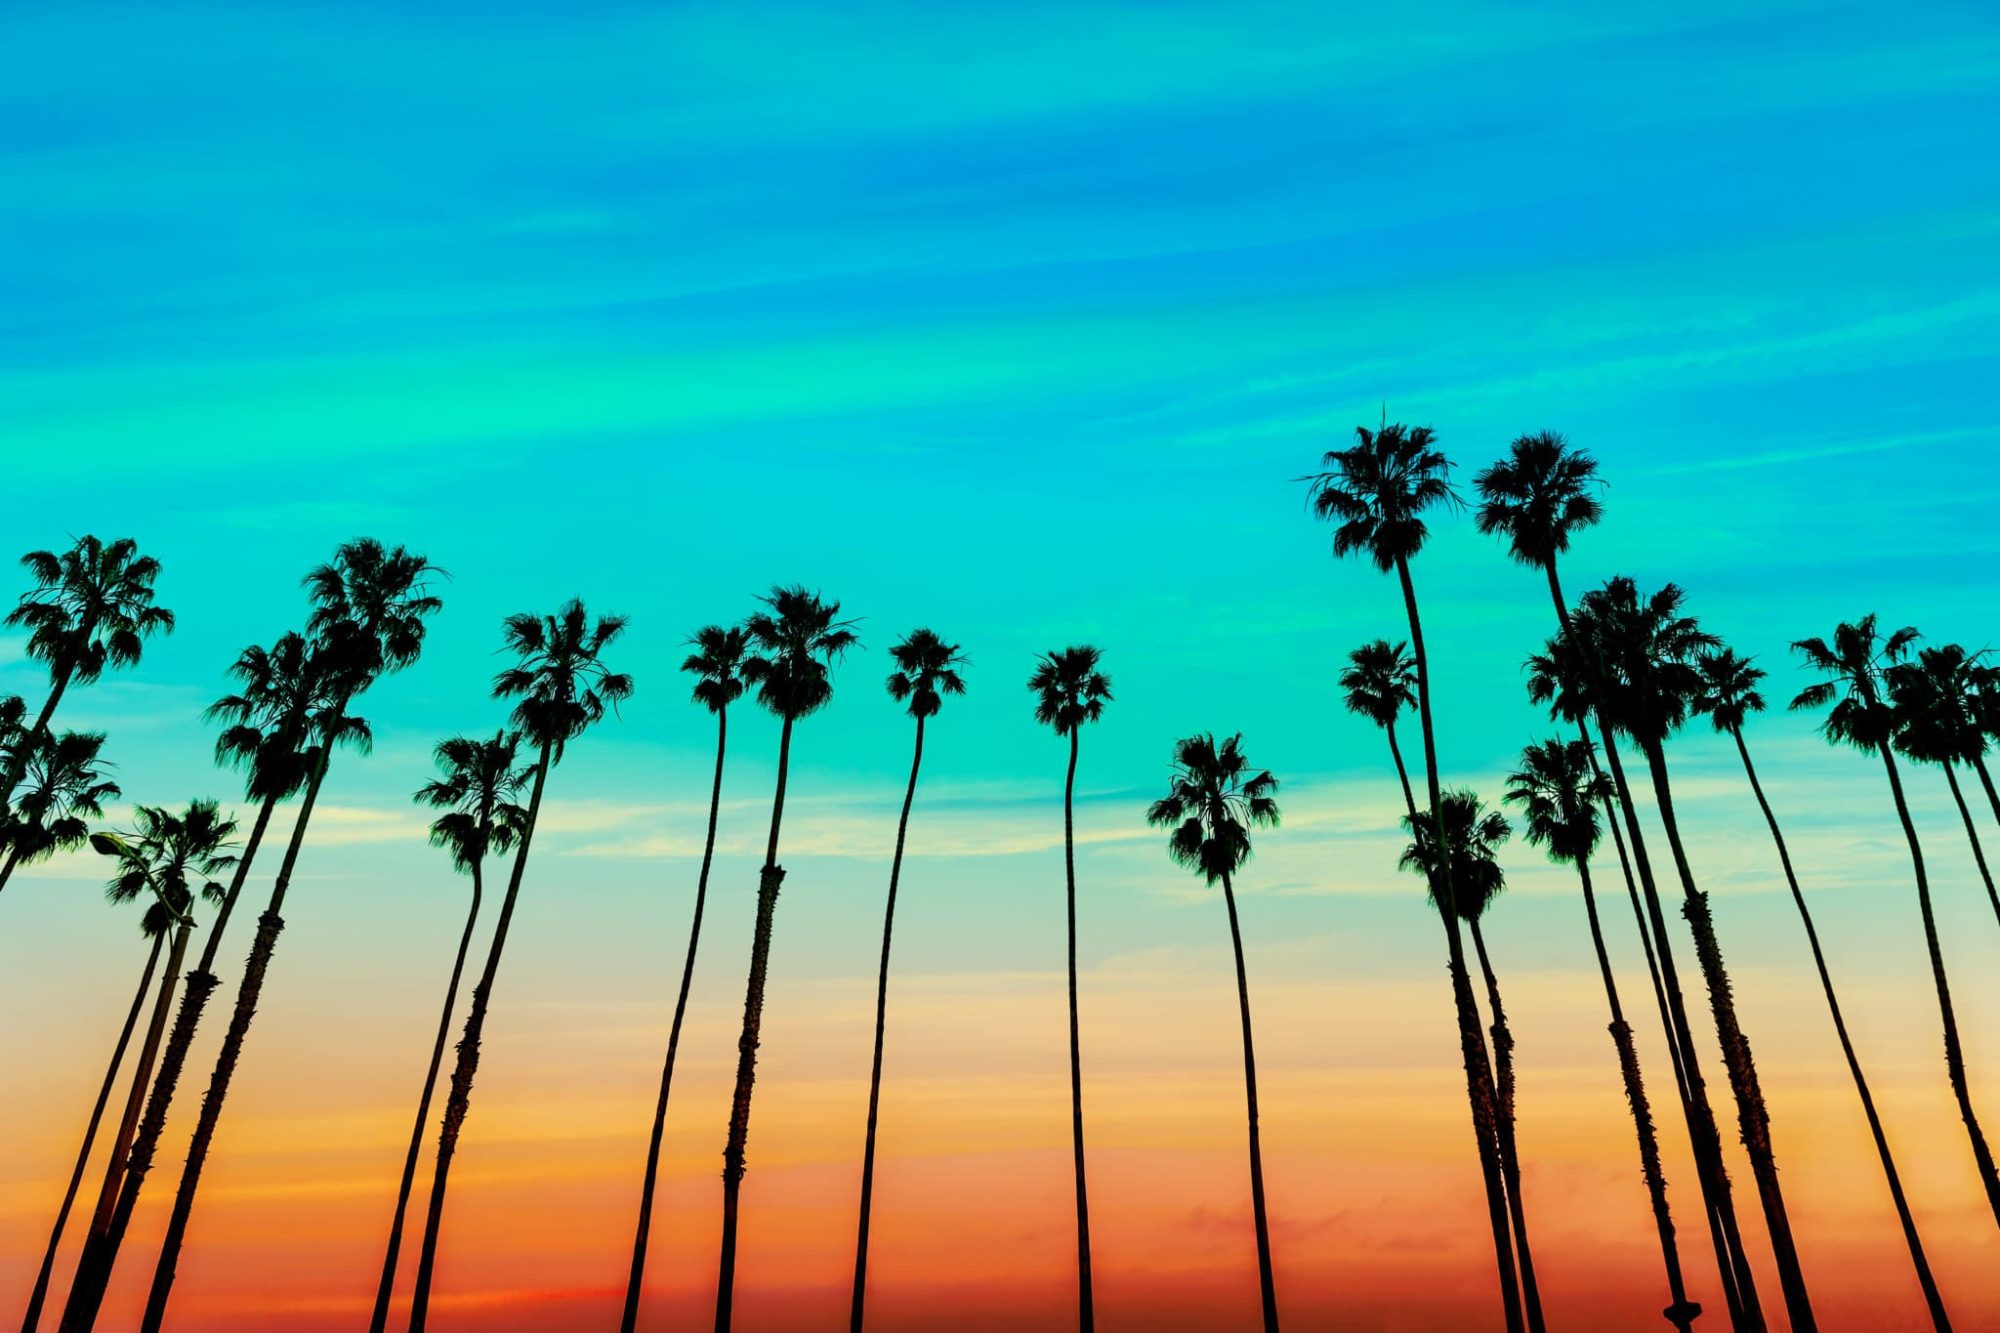 California sunset Palm trees in Santa Barbara